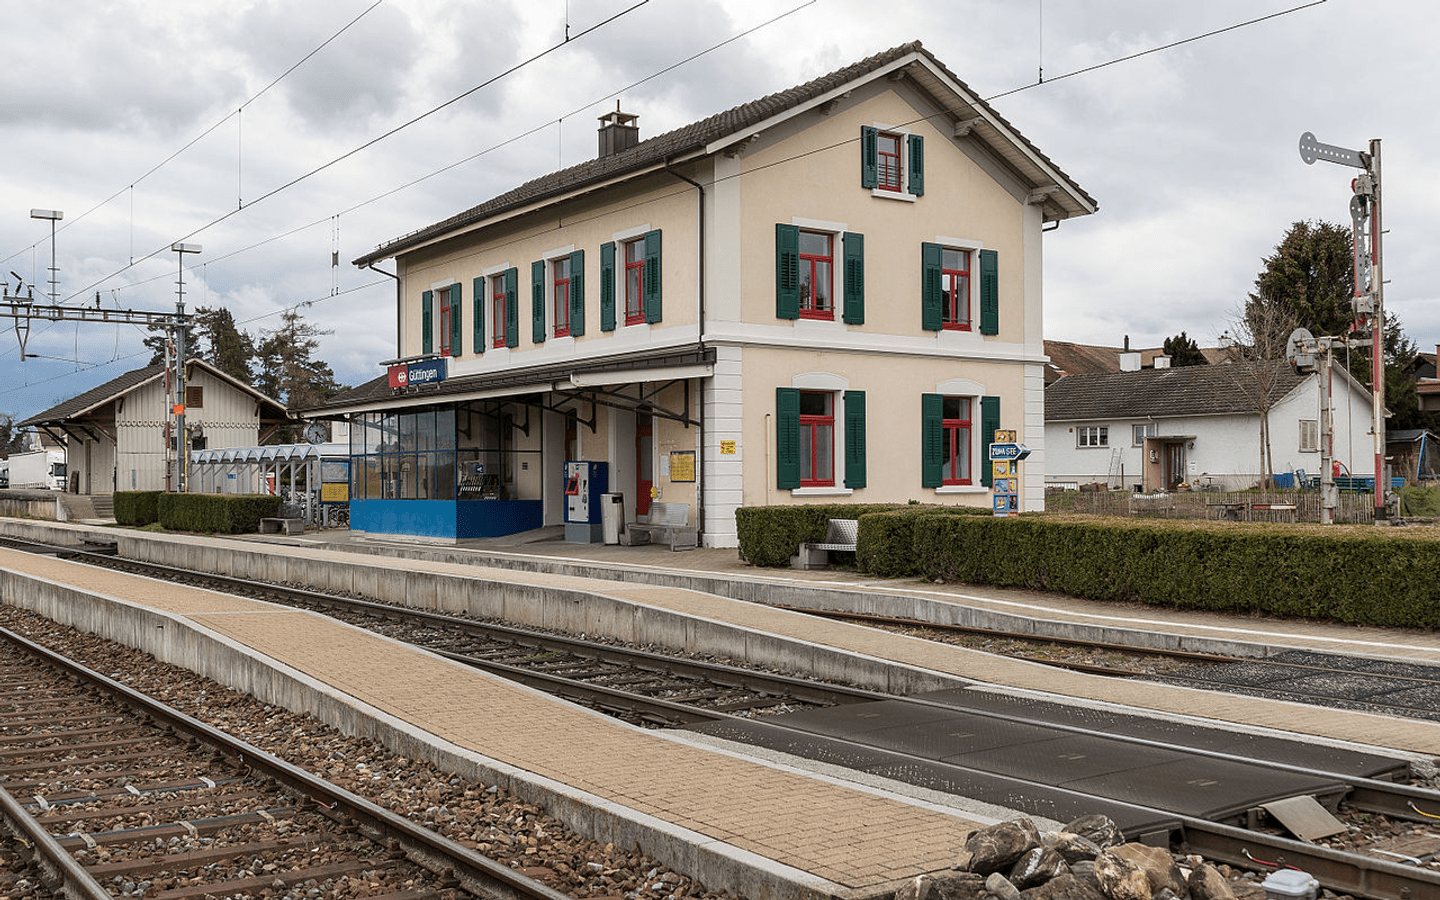 Bahnhof Güttingen, erbaut 1870/71